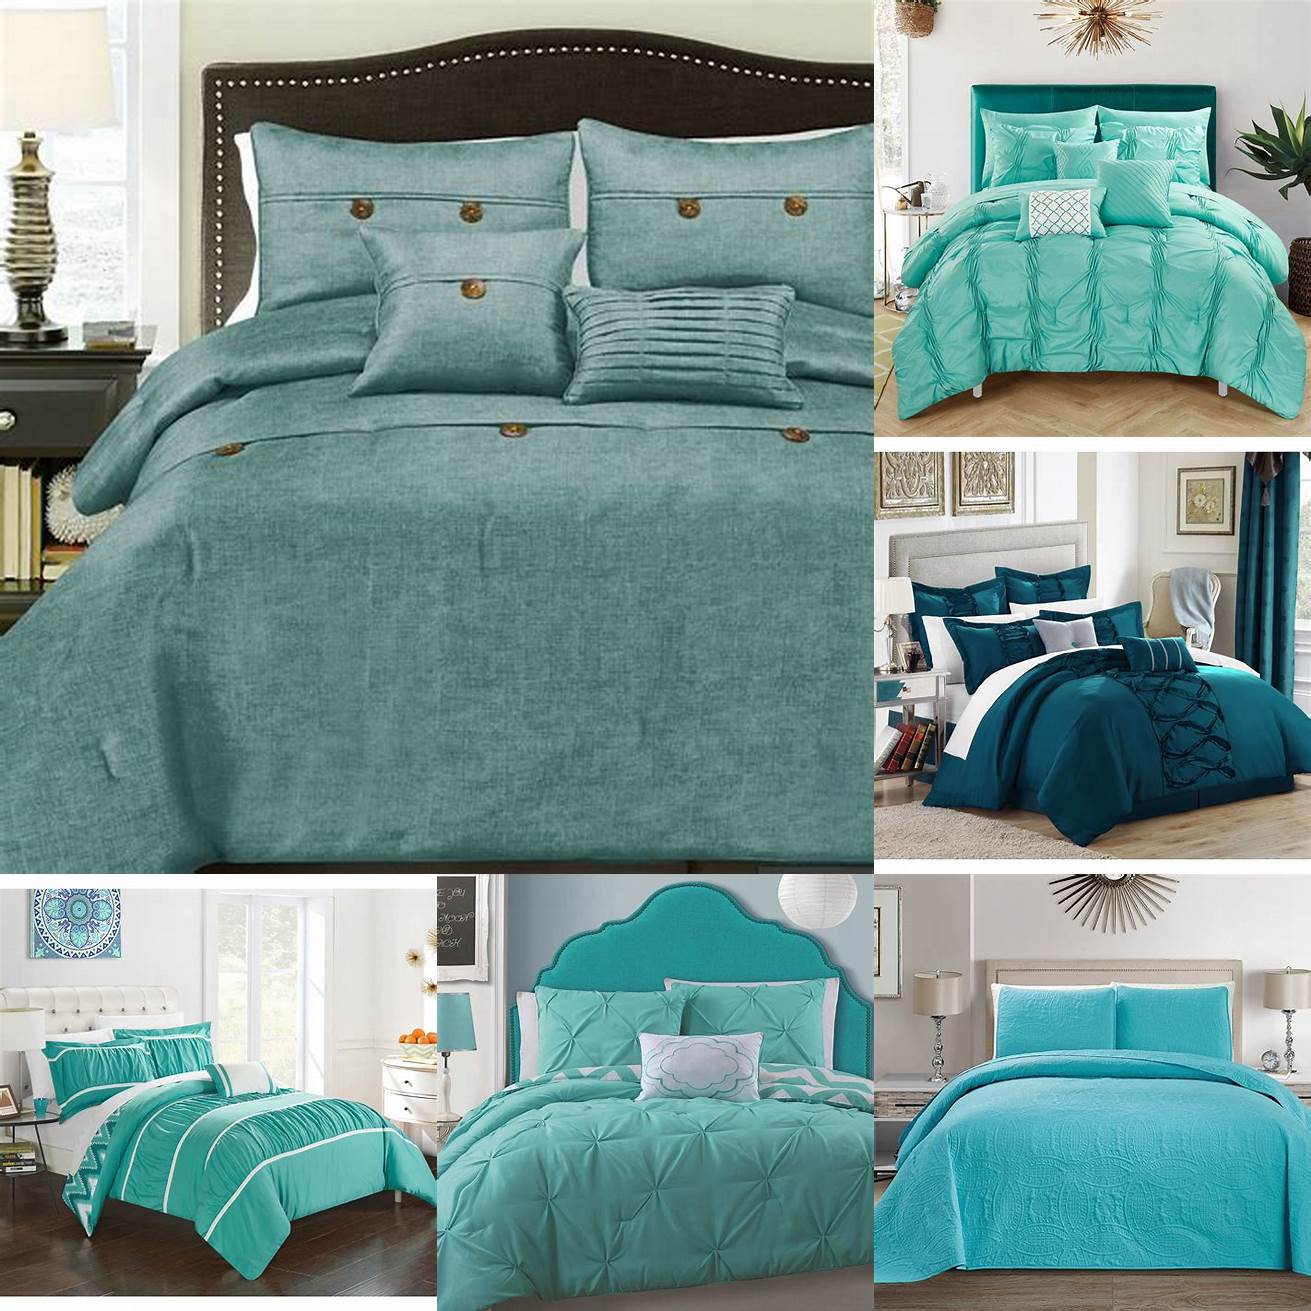 Turquoise bedding